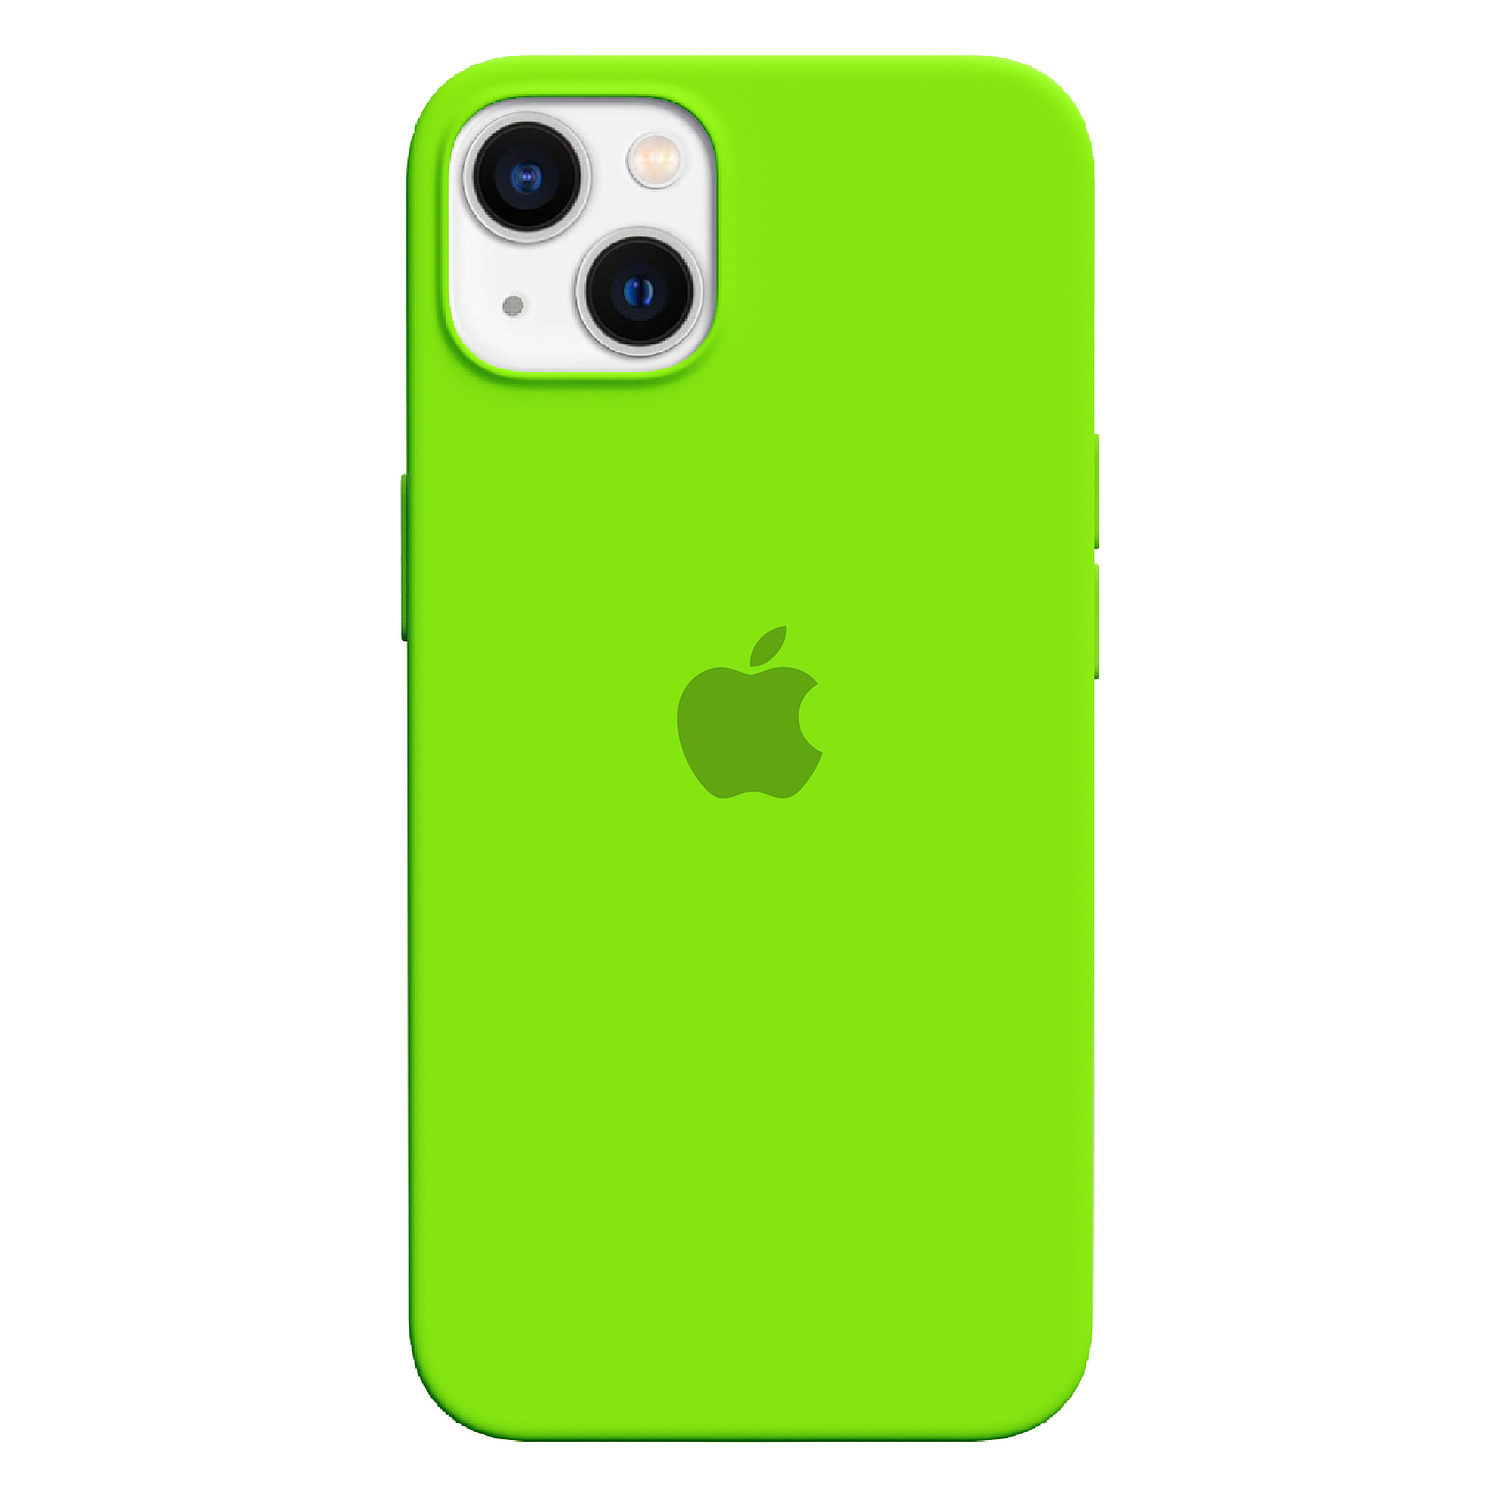 Funda de iPhone verde neón para iPhone 13, funda 13 Pro Max